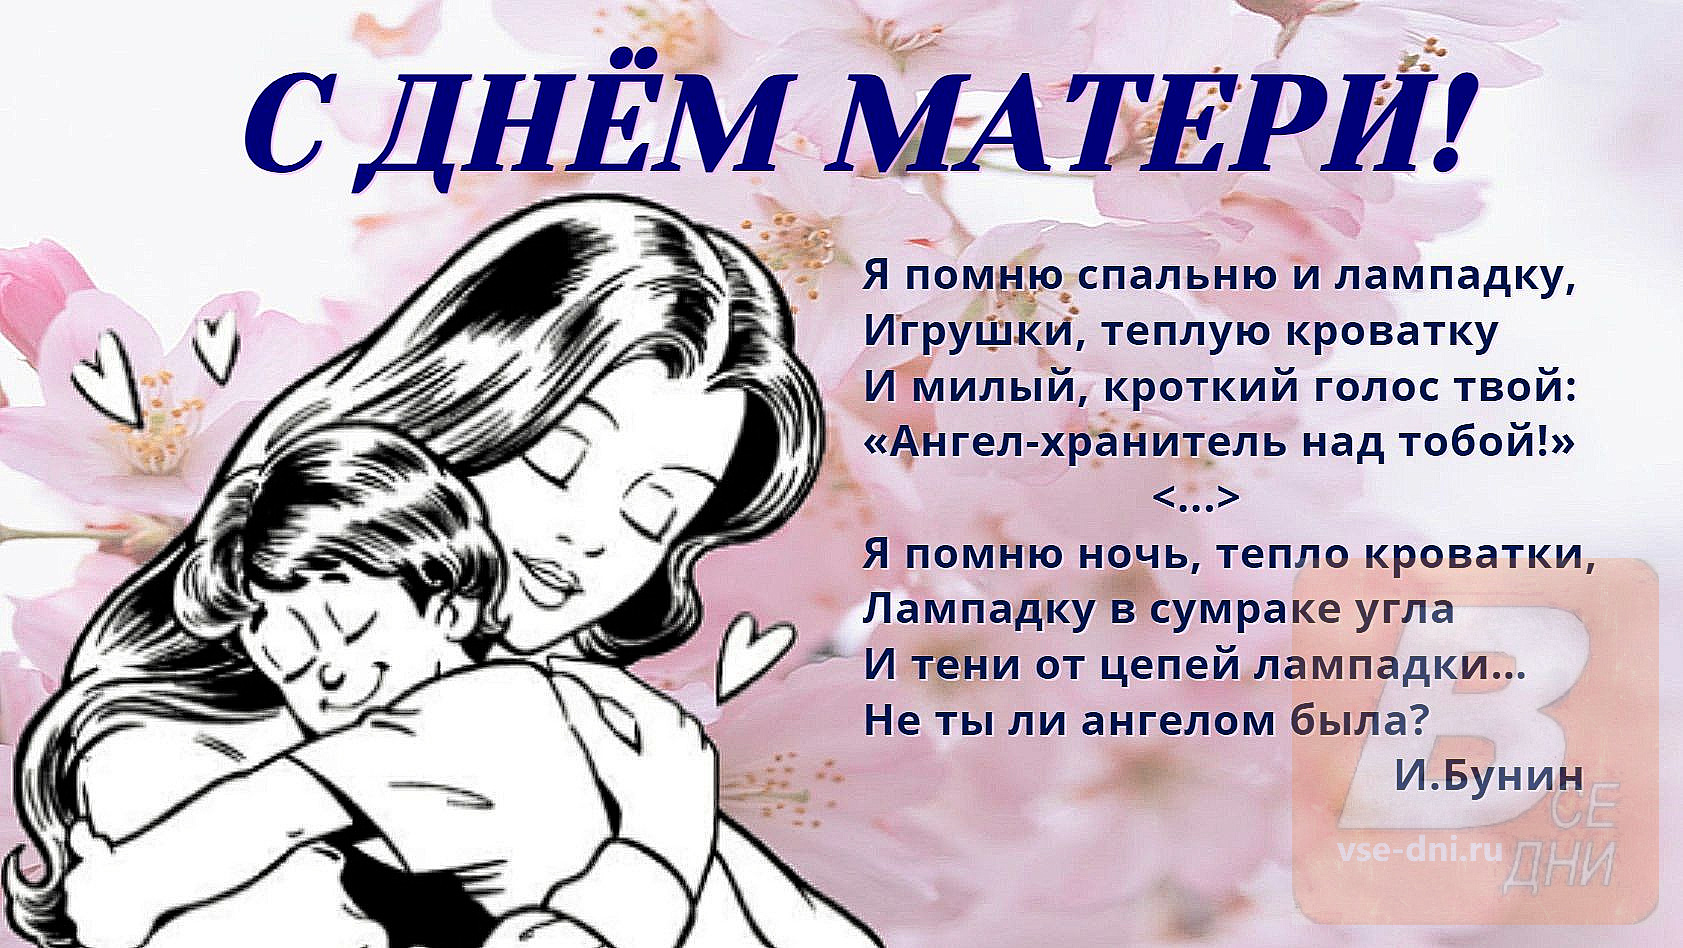 День матери до 5 предложений. День матери. С днём матери поздравления. День матери в России. С днём матери картинки.